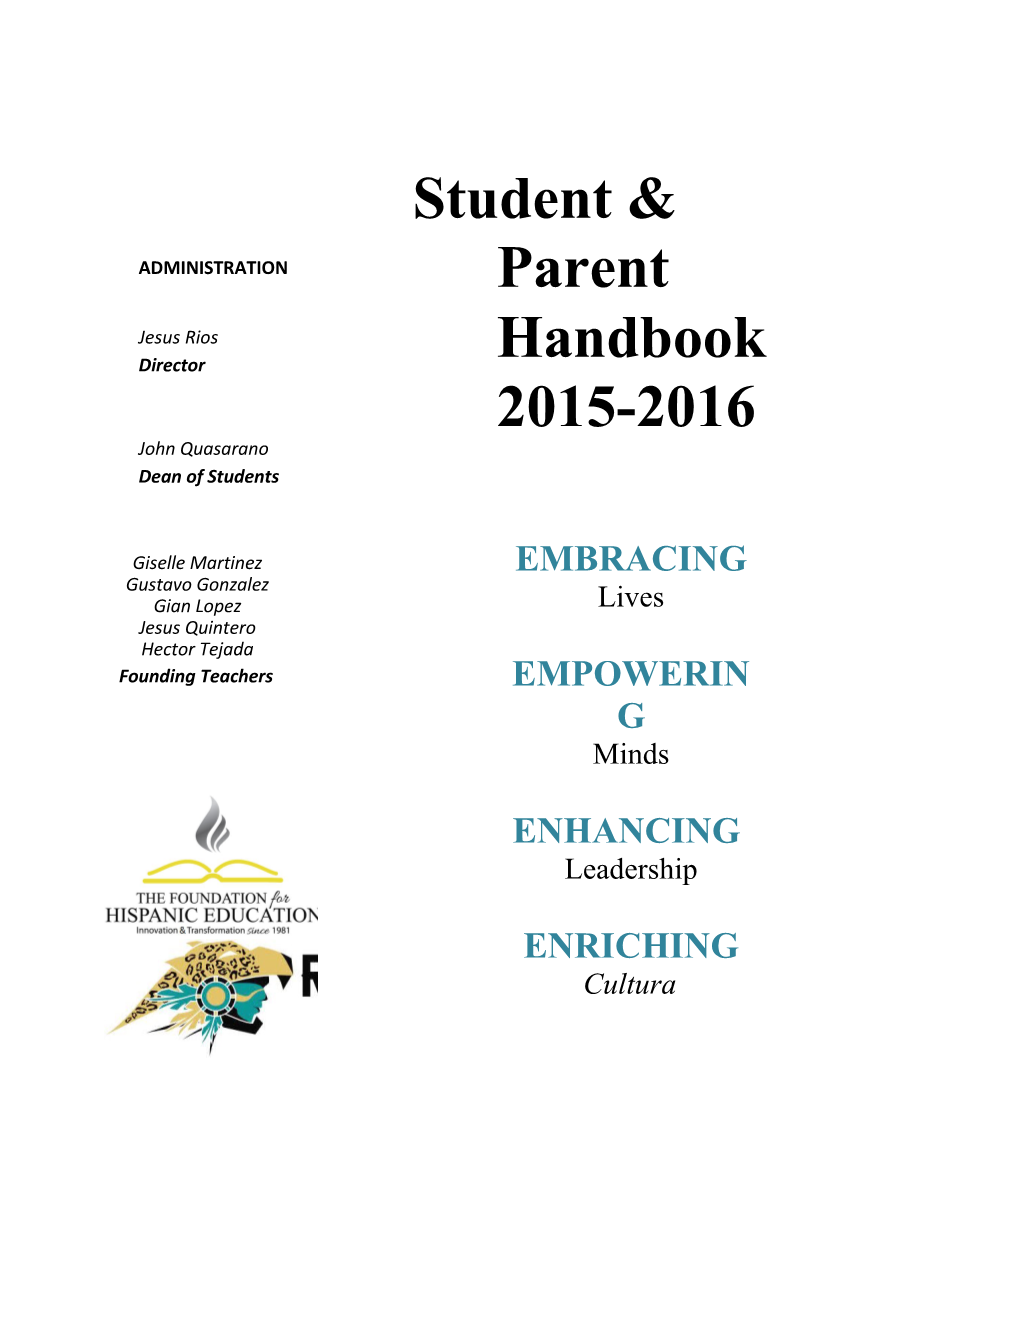 LCPA Student & Parent Handbook